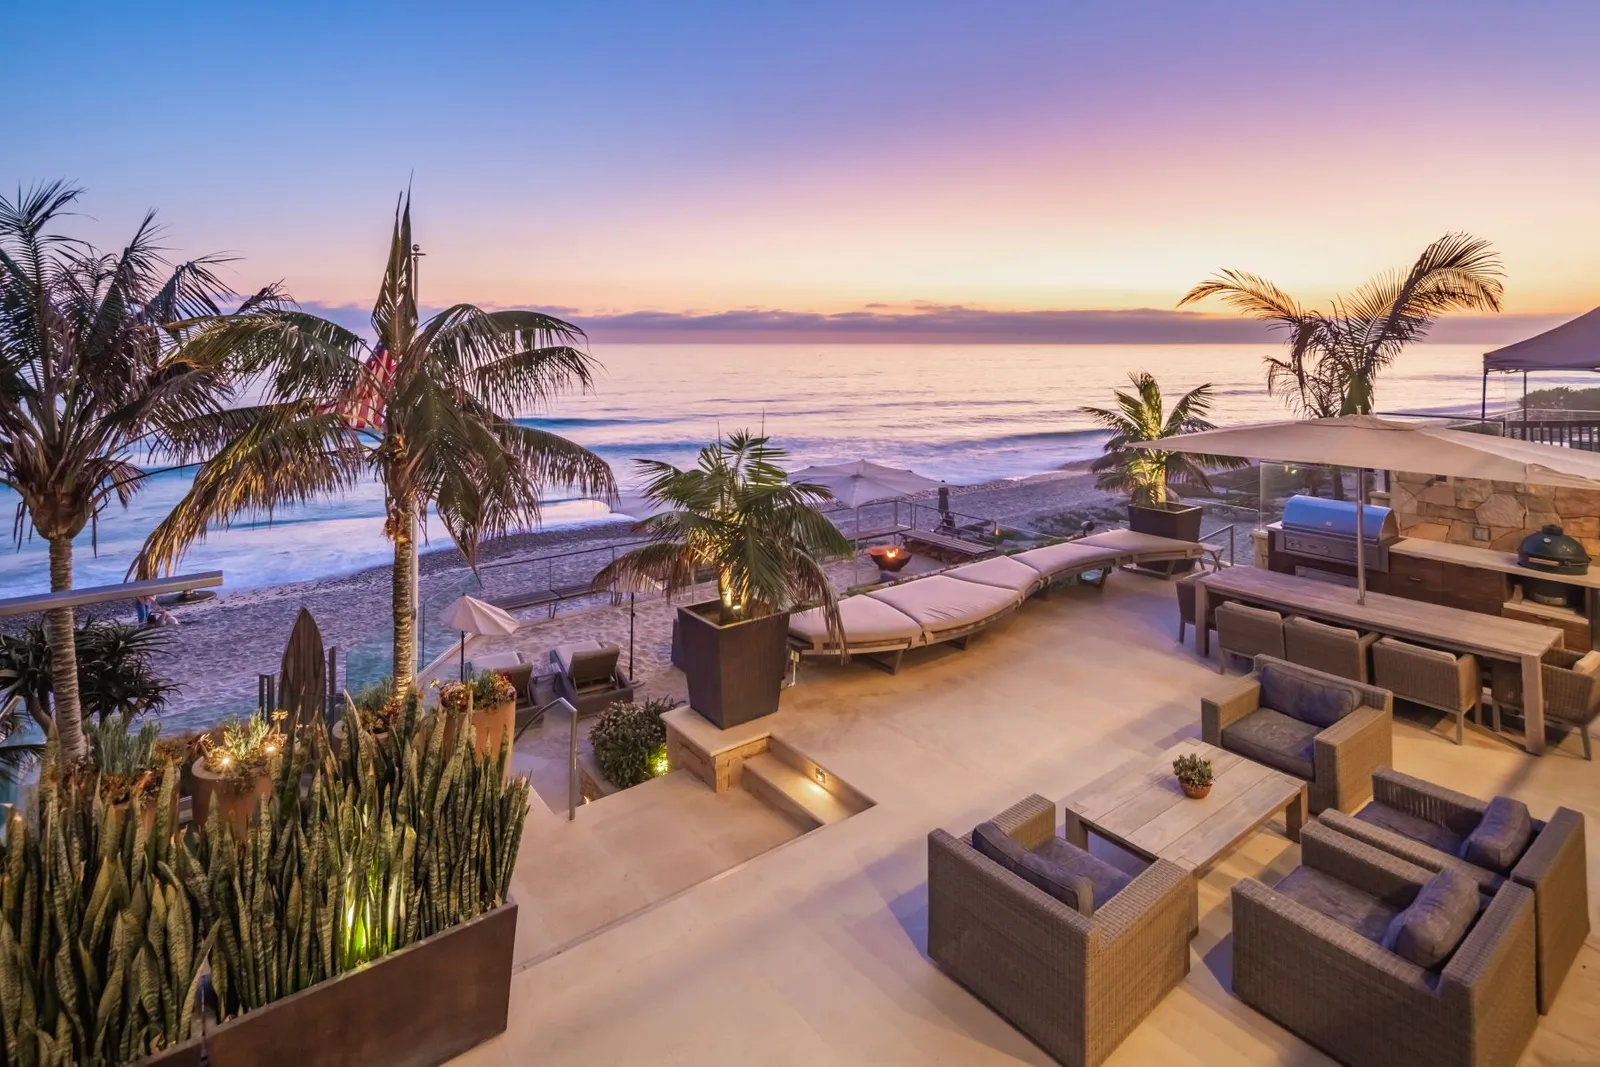 CARLSBAD CA – Impressive three-story villa on a gorgeous beach for sale